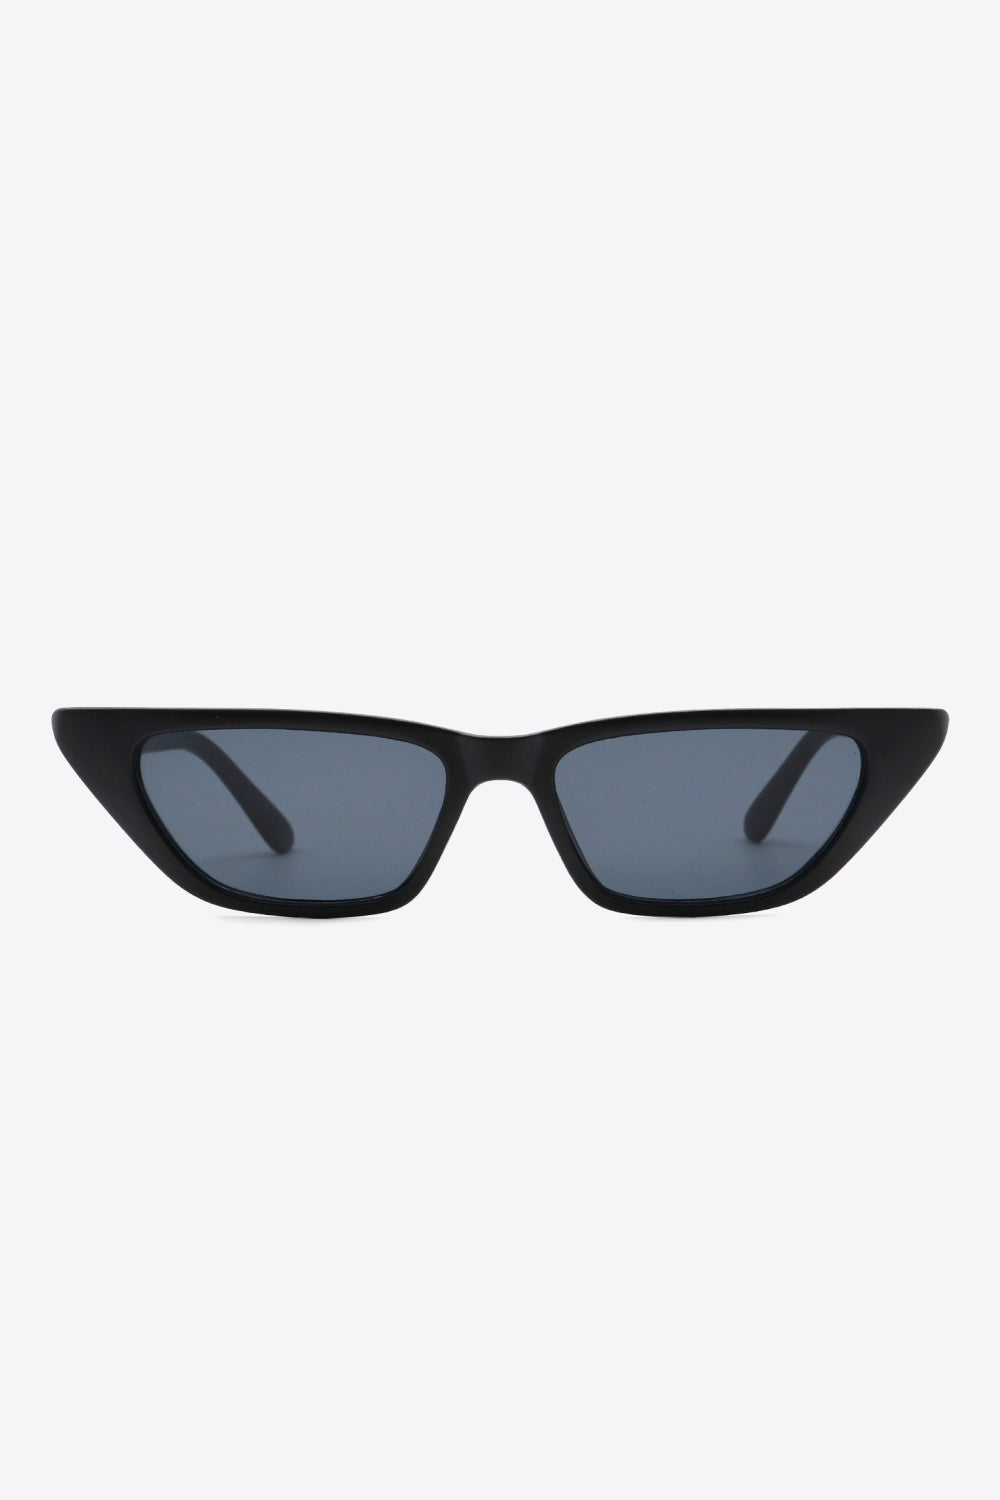 UV400 Polycarbonate Cat Eye Sunglasses - Online Only